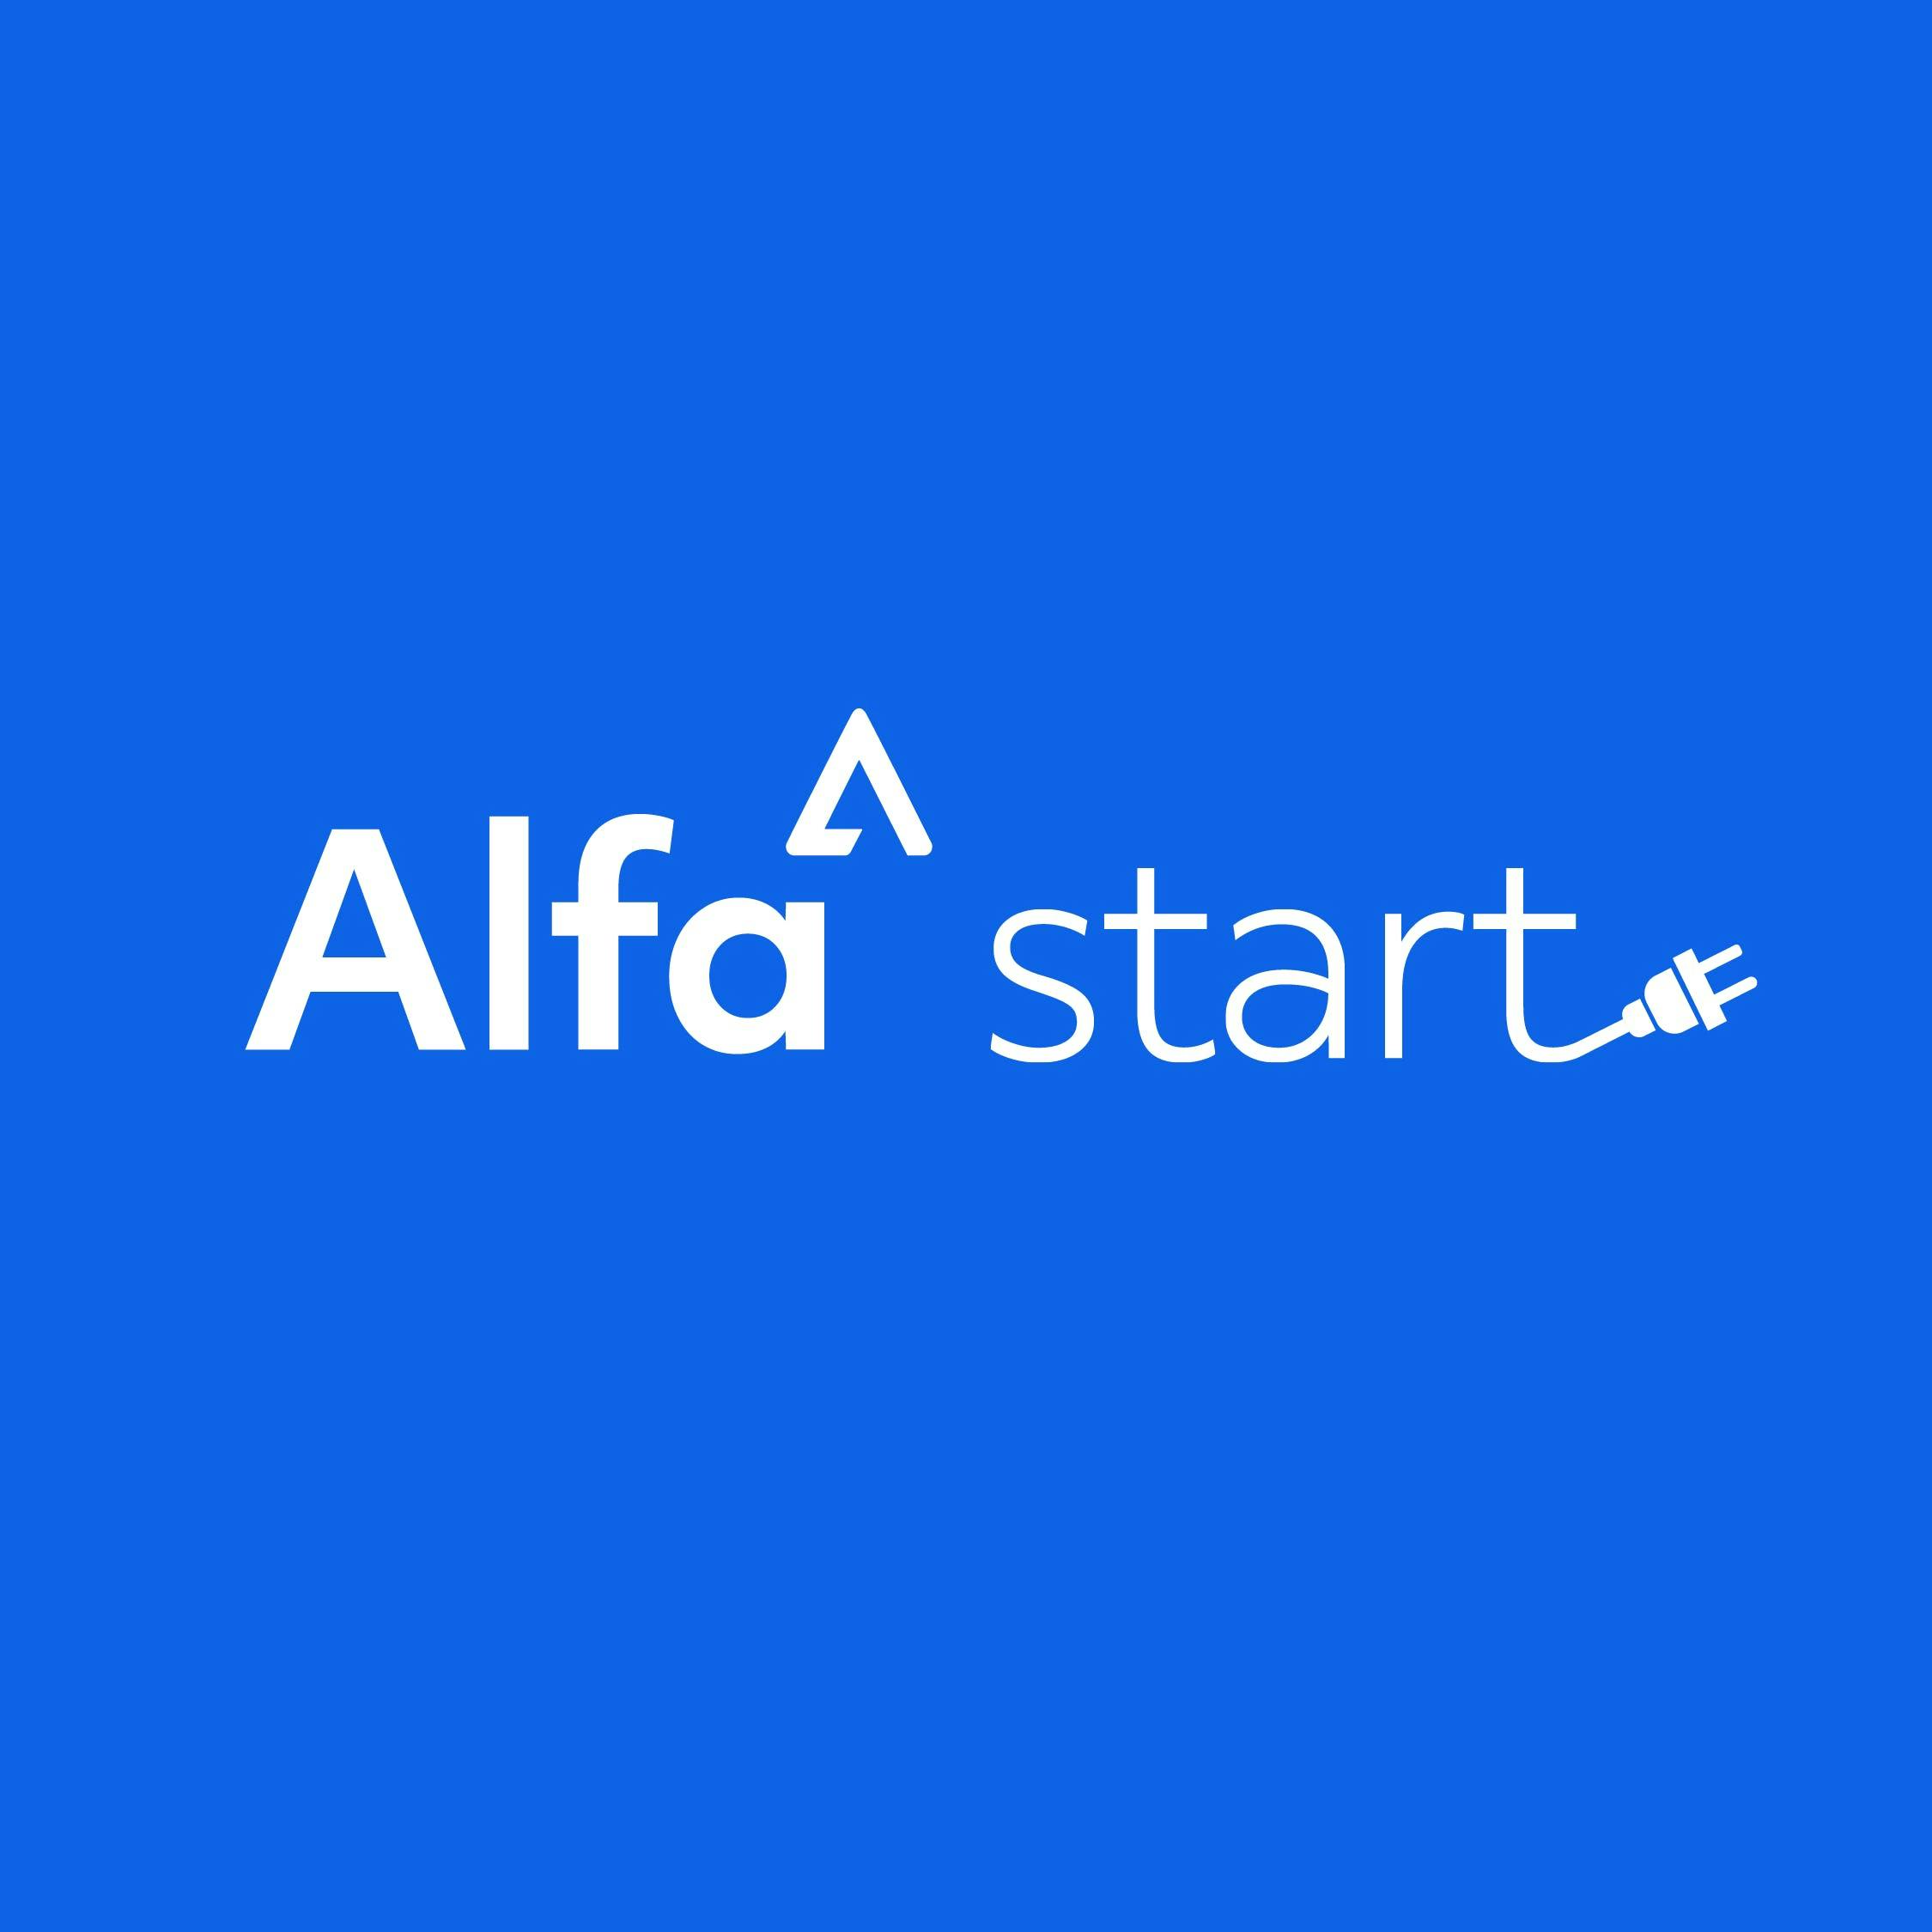 Alfa Start logo in white